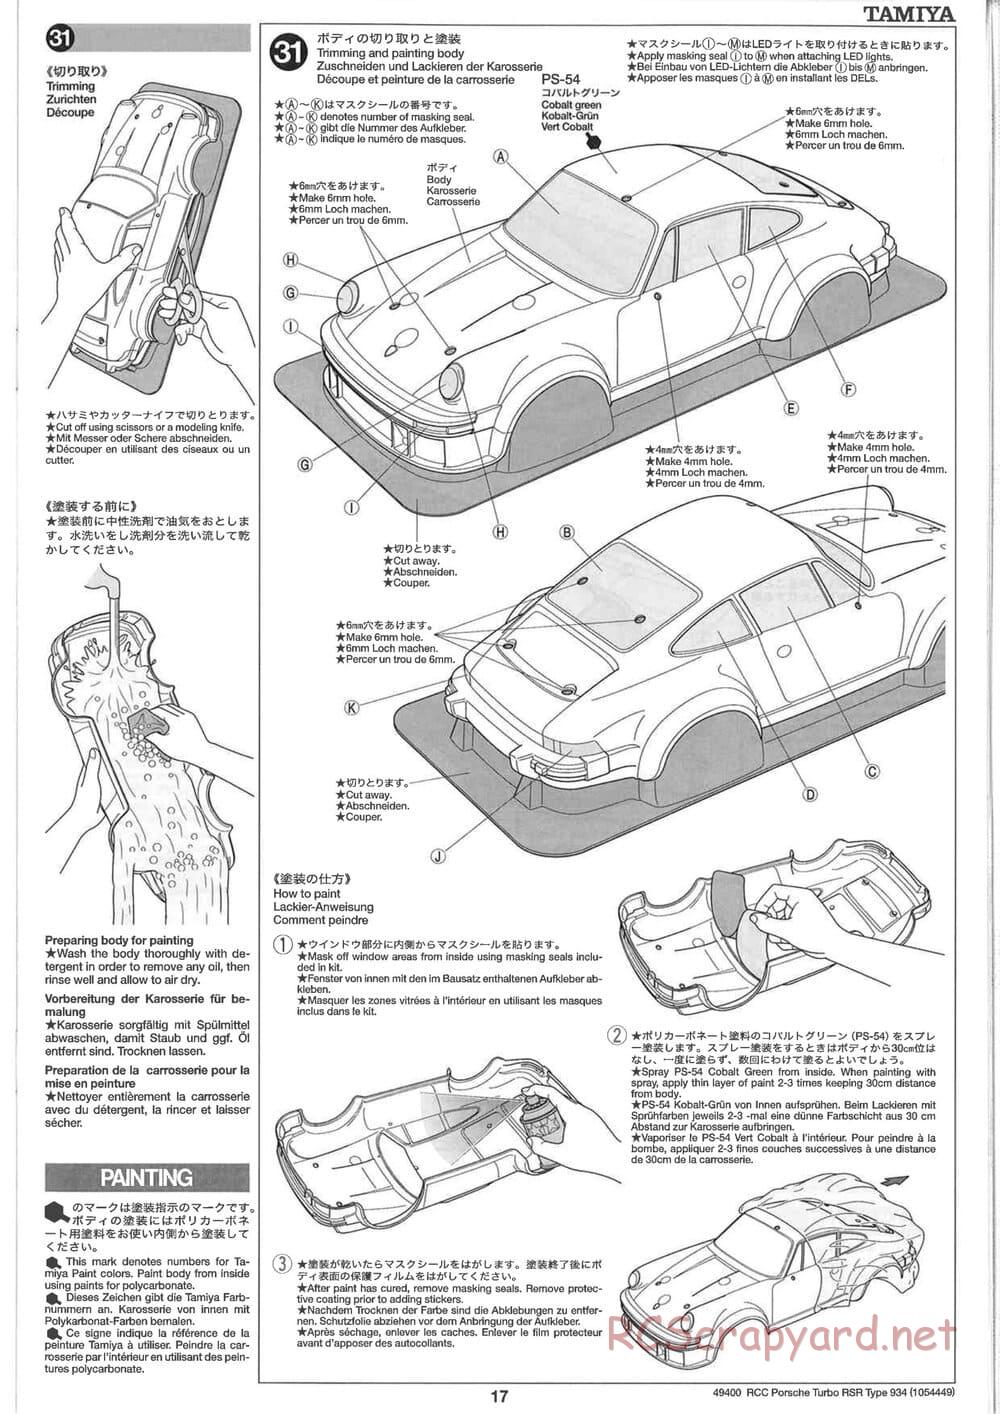 Tamiya - Porsche Turbo RSR Type 934 - TA05 Chassis - Manual - Page 17